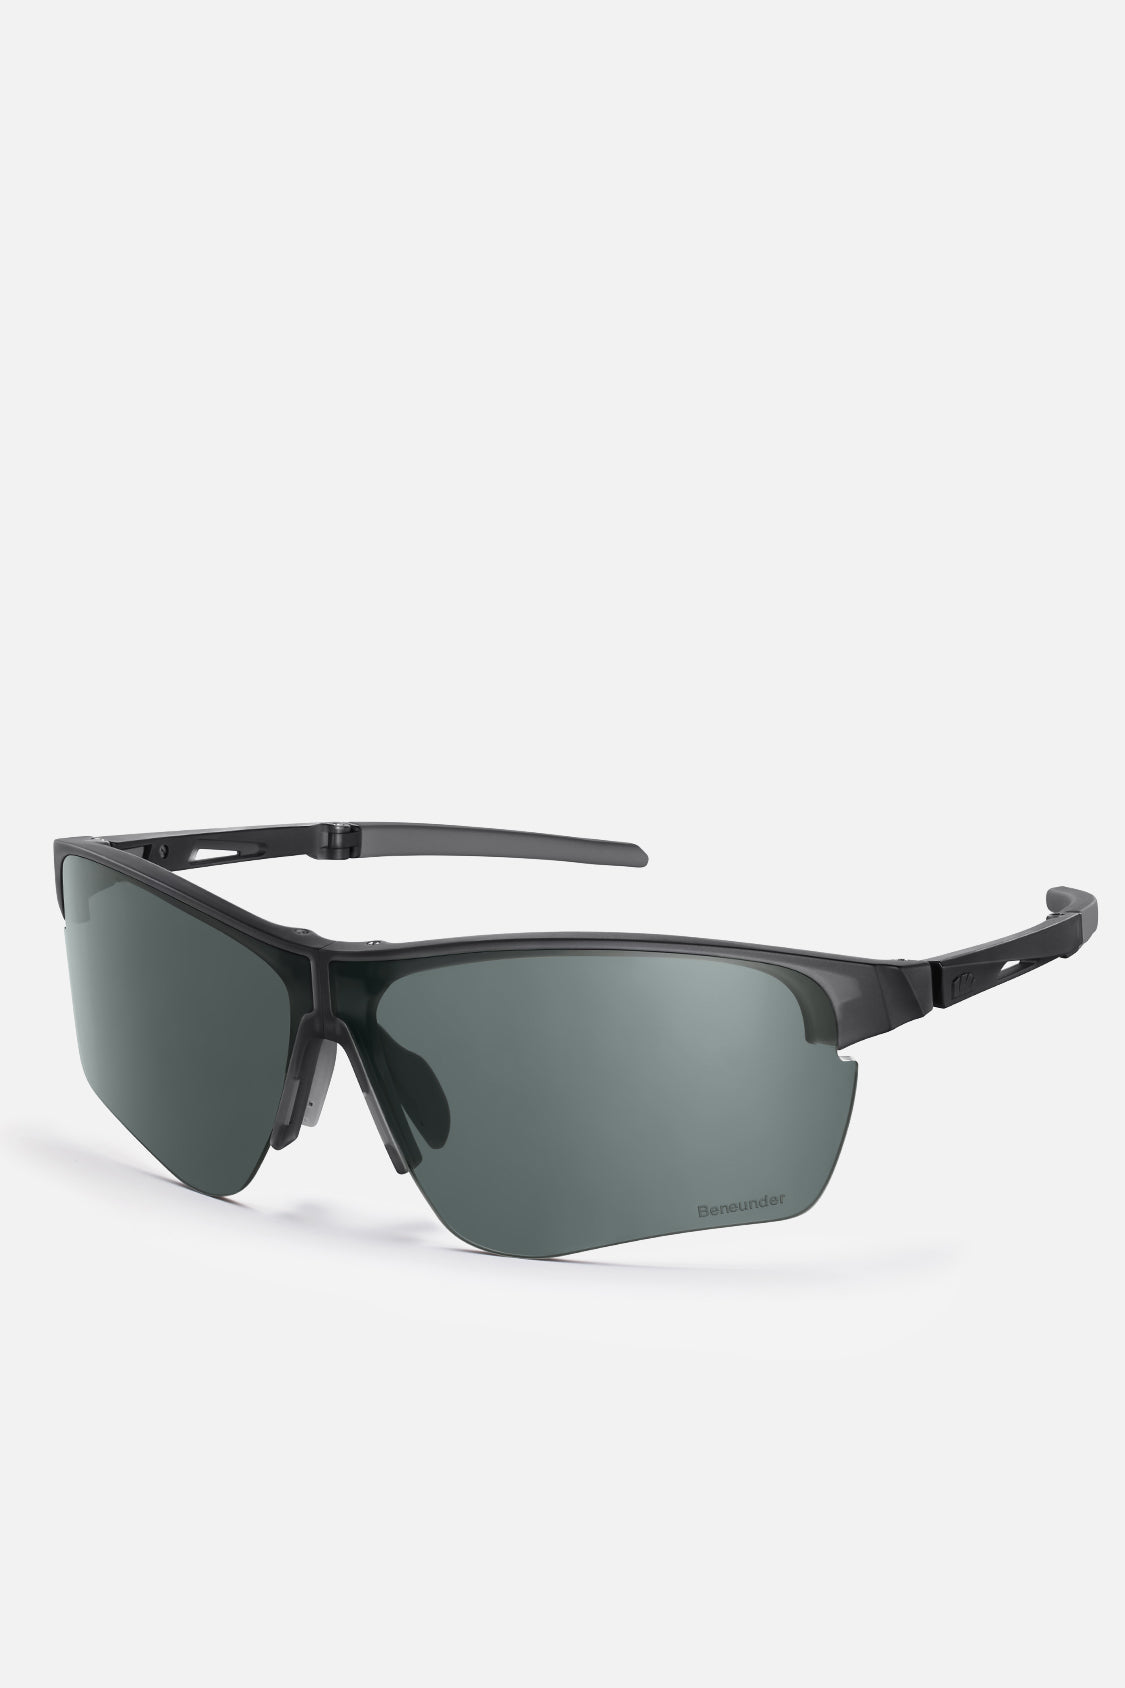 beneunder foldable sports sunglasses #color_polar night gray